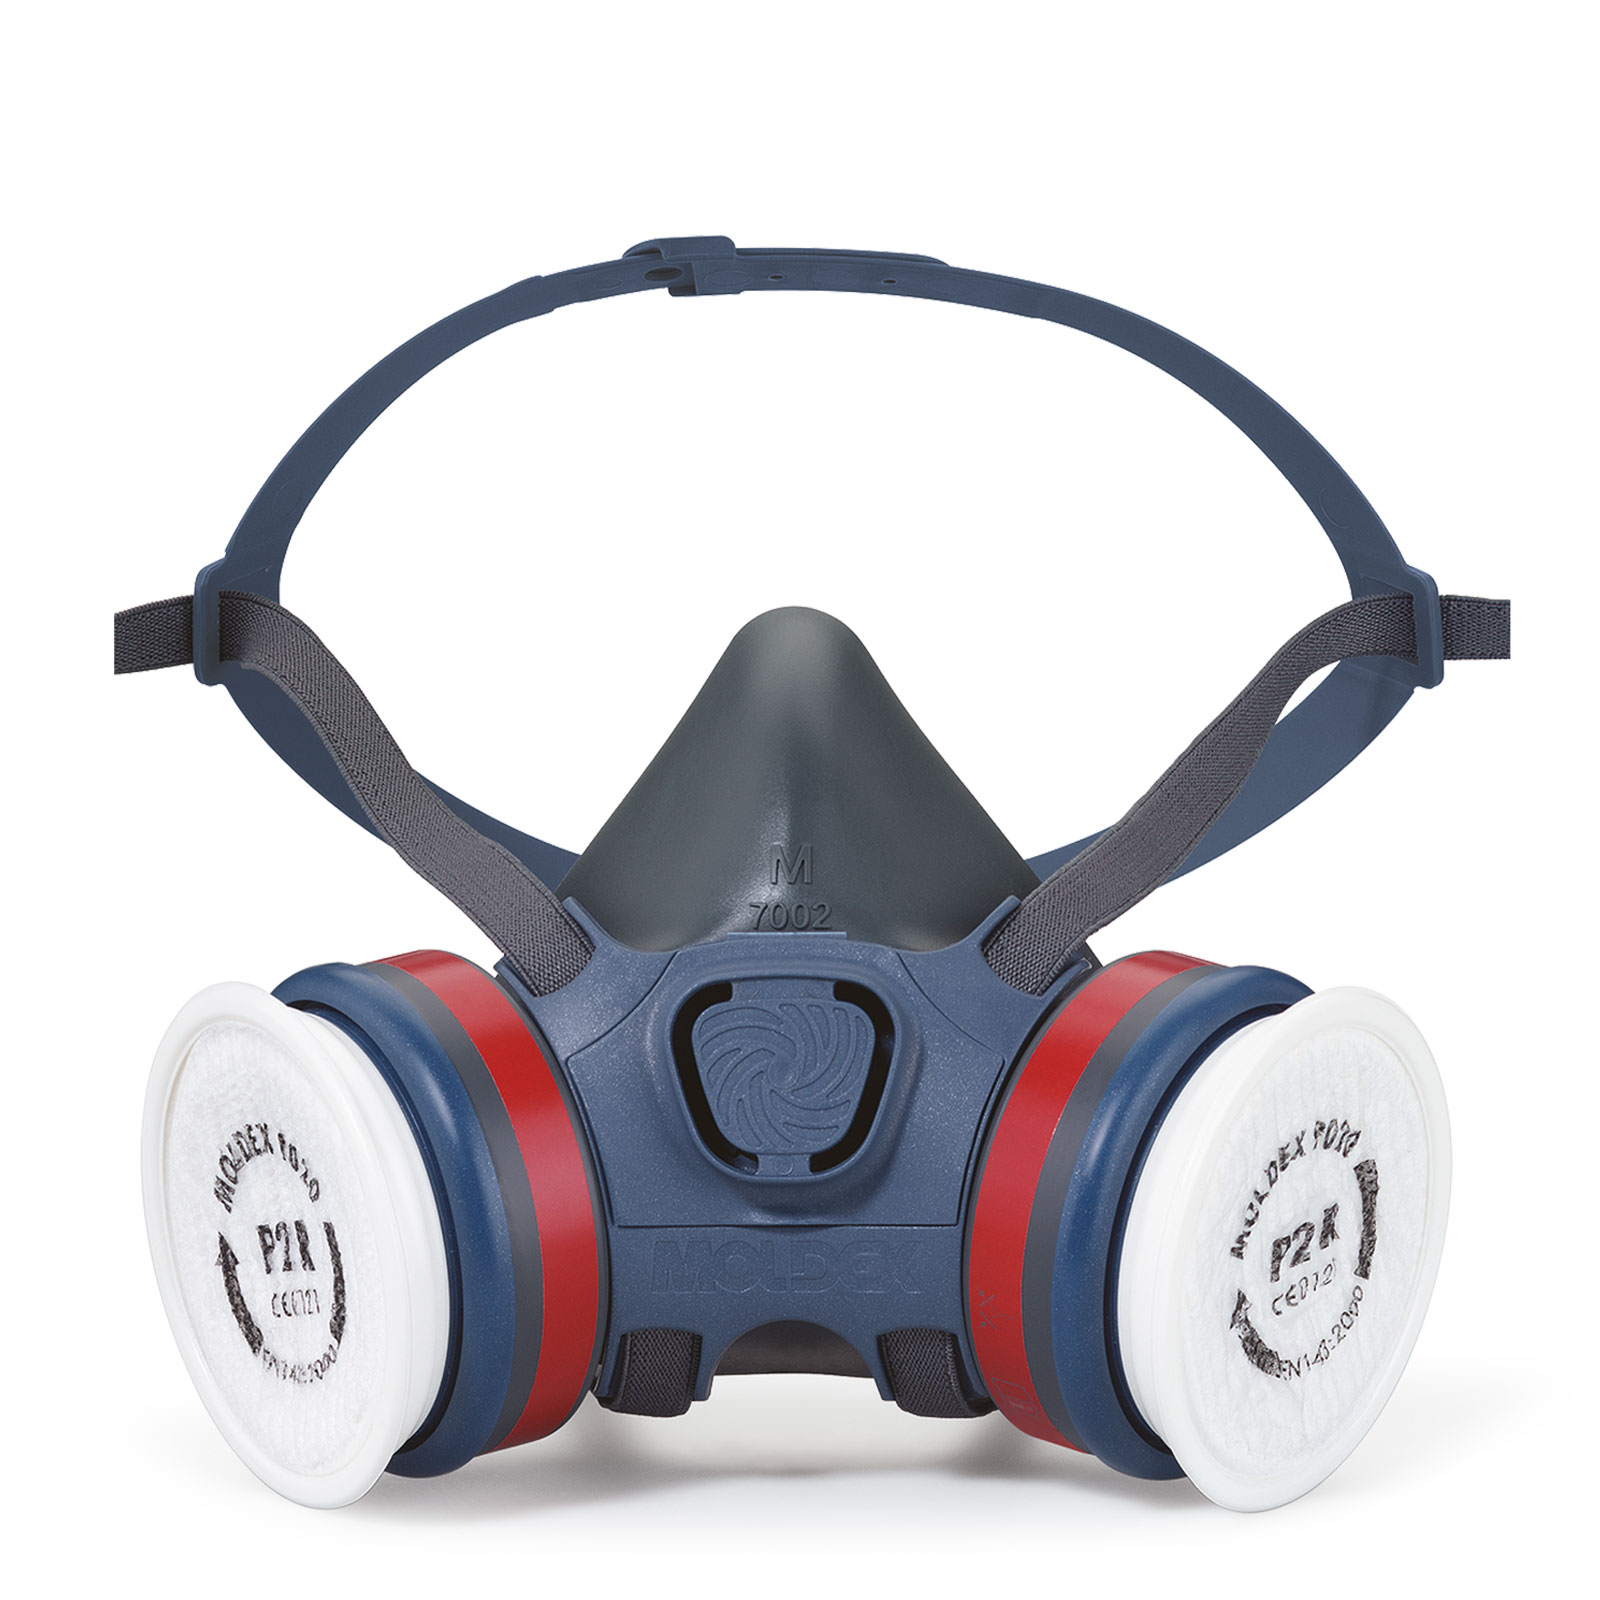 Moldex 7002 Series Half Mask Respirator, Size Small